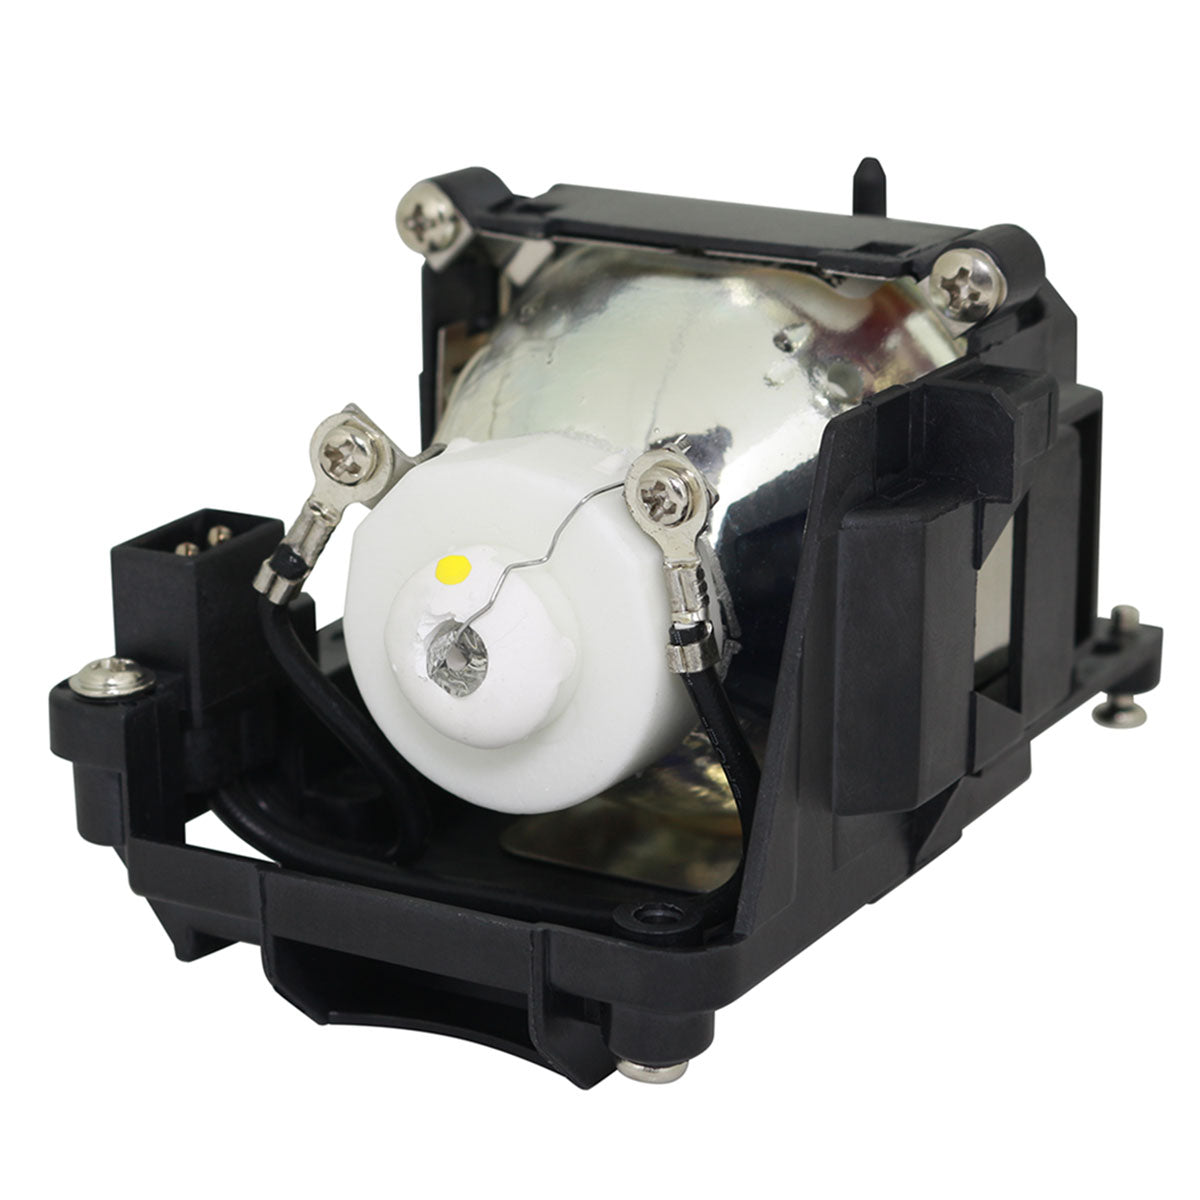 ACTO 1300022500 Ushio Projector Lamp Module